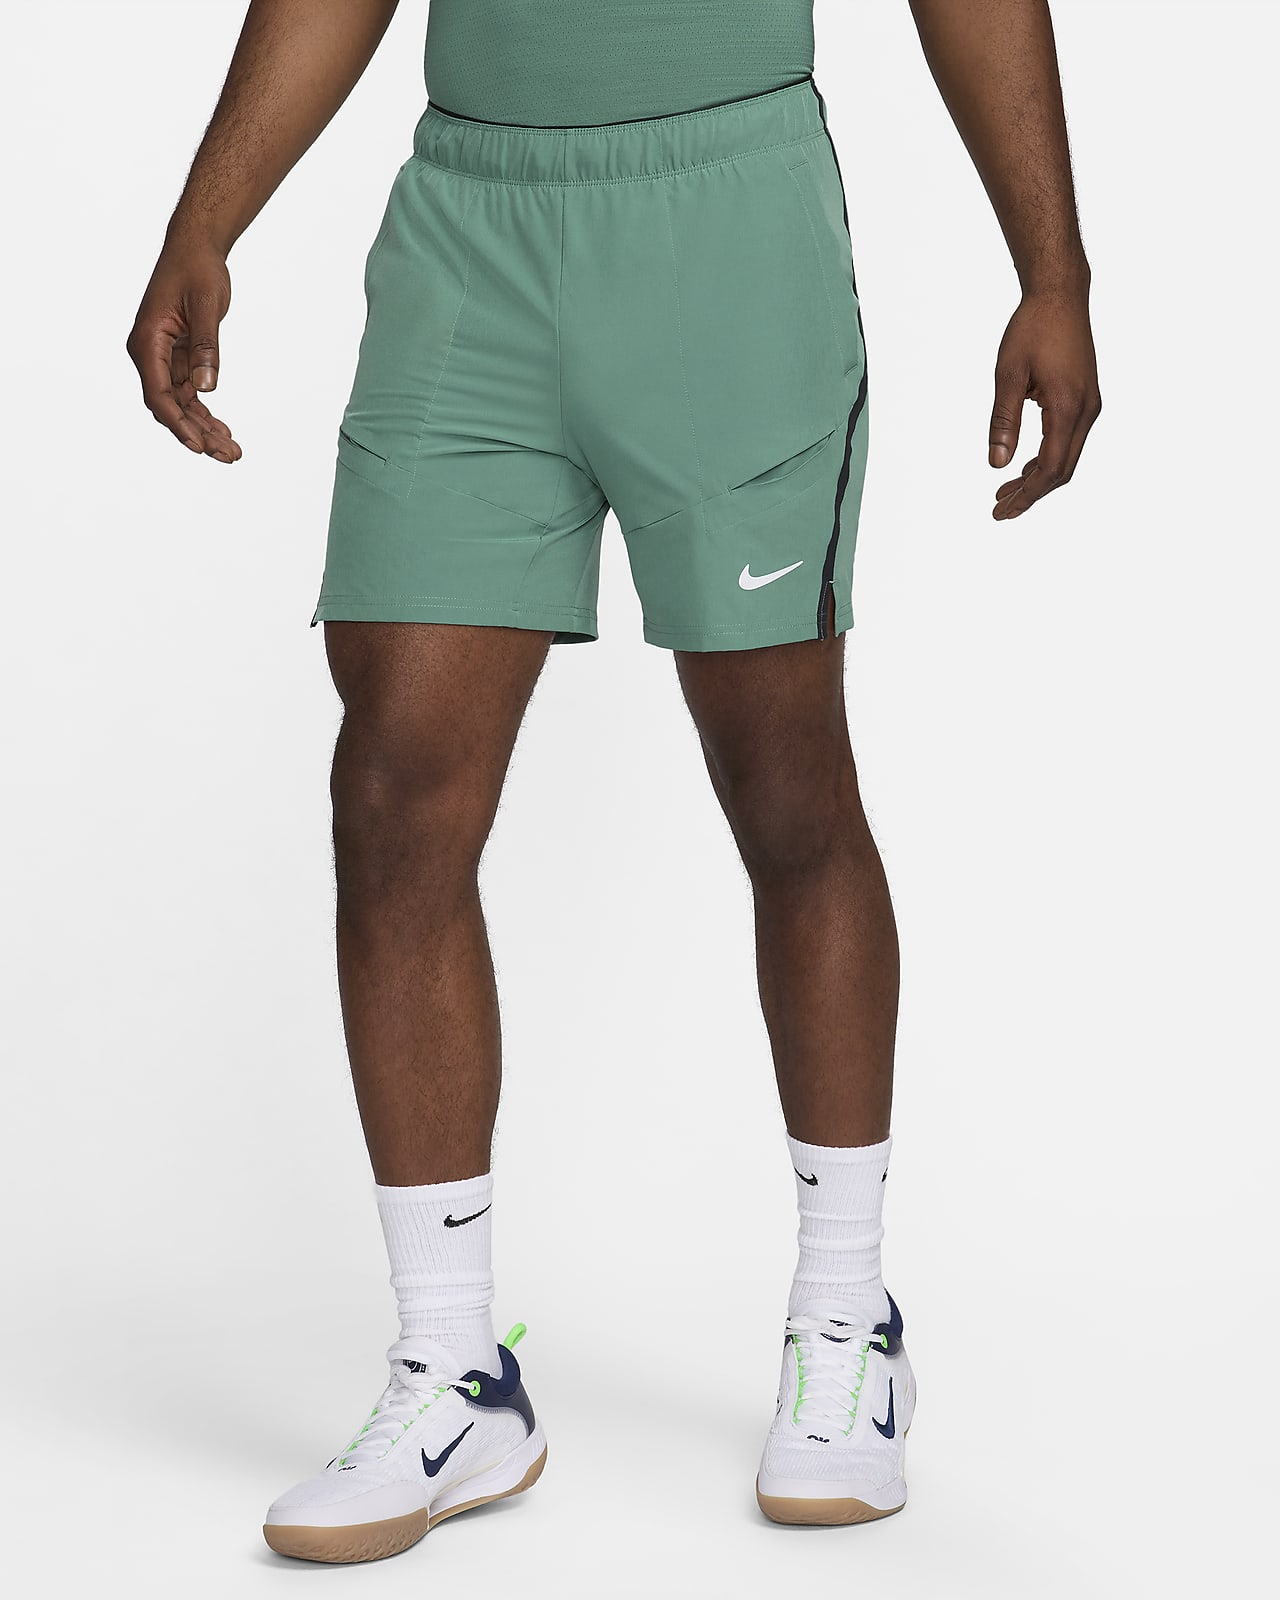 Calções de ténis de 18 cm Dri-FIT NikeCourt Advantage para homem